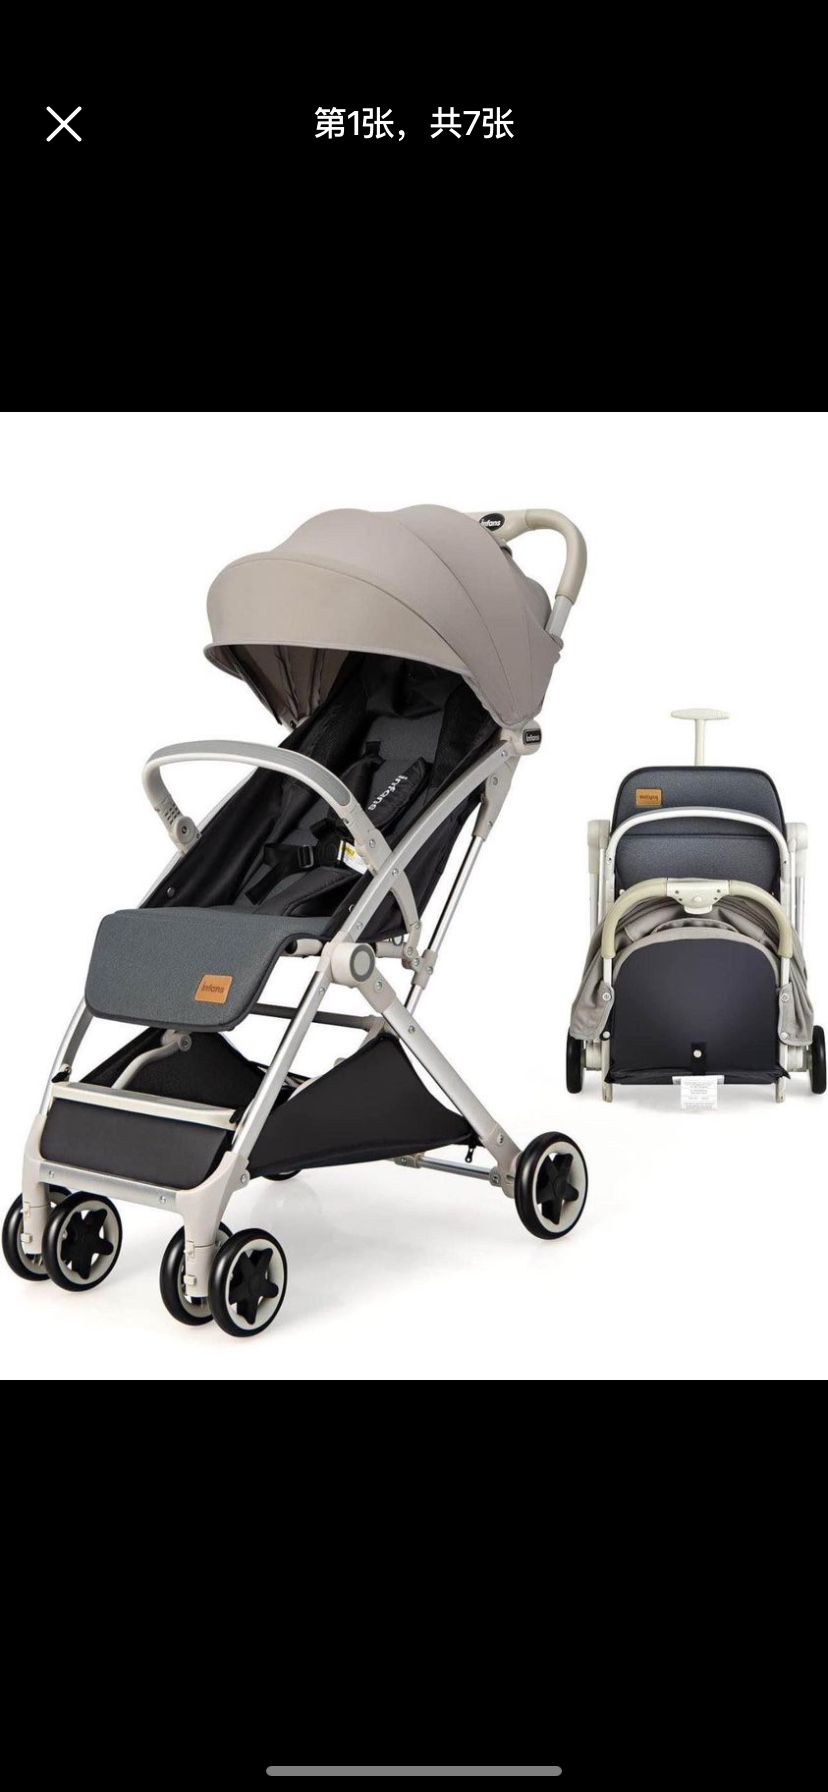 INFANS Lightweight Baby Stroller, Compact Stroller